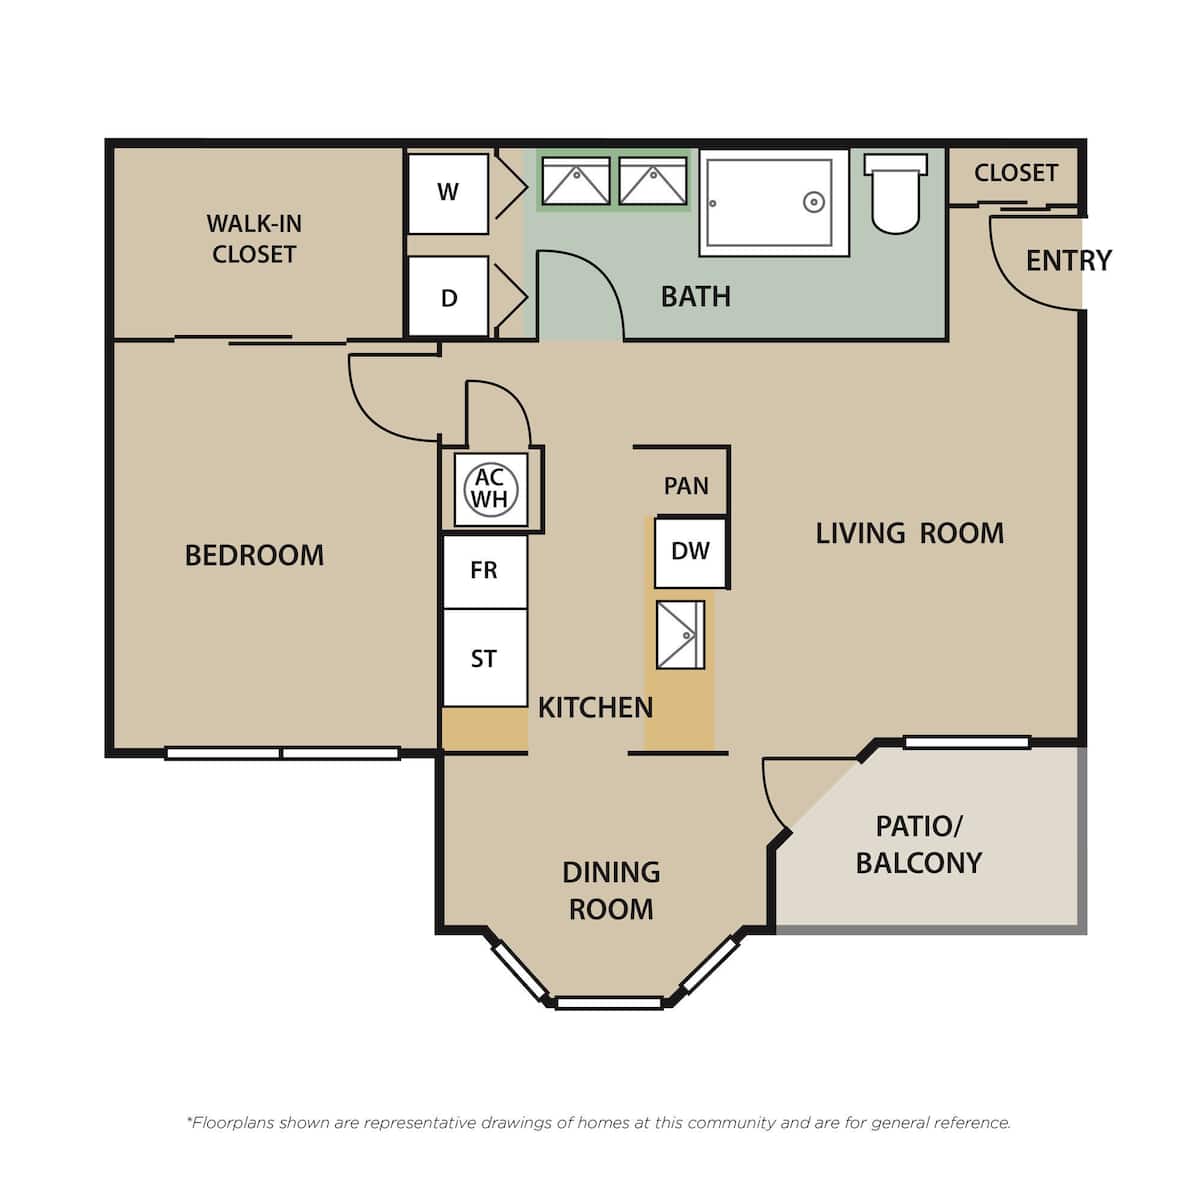 Floorplan diagram for GROVE A4, showing 1 bedroom